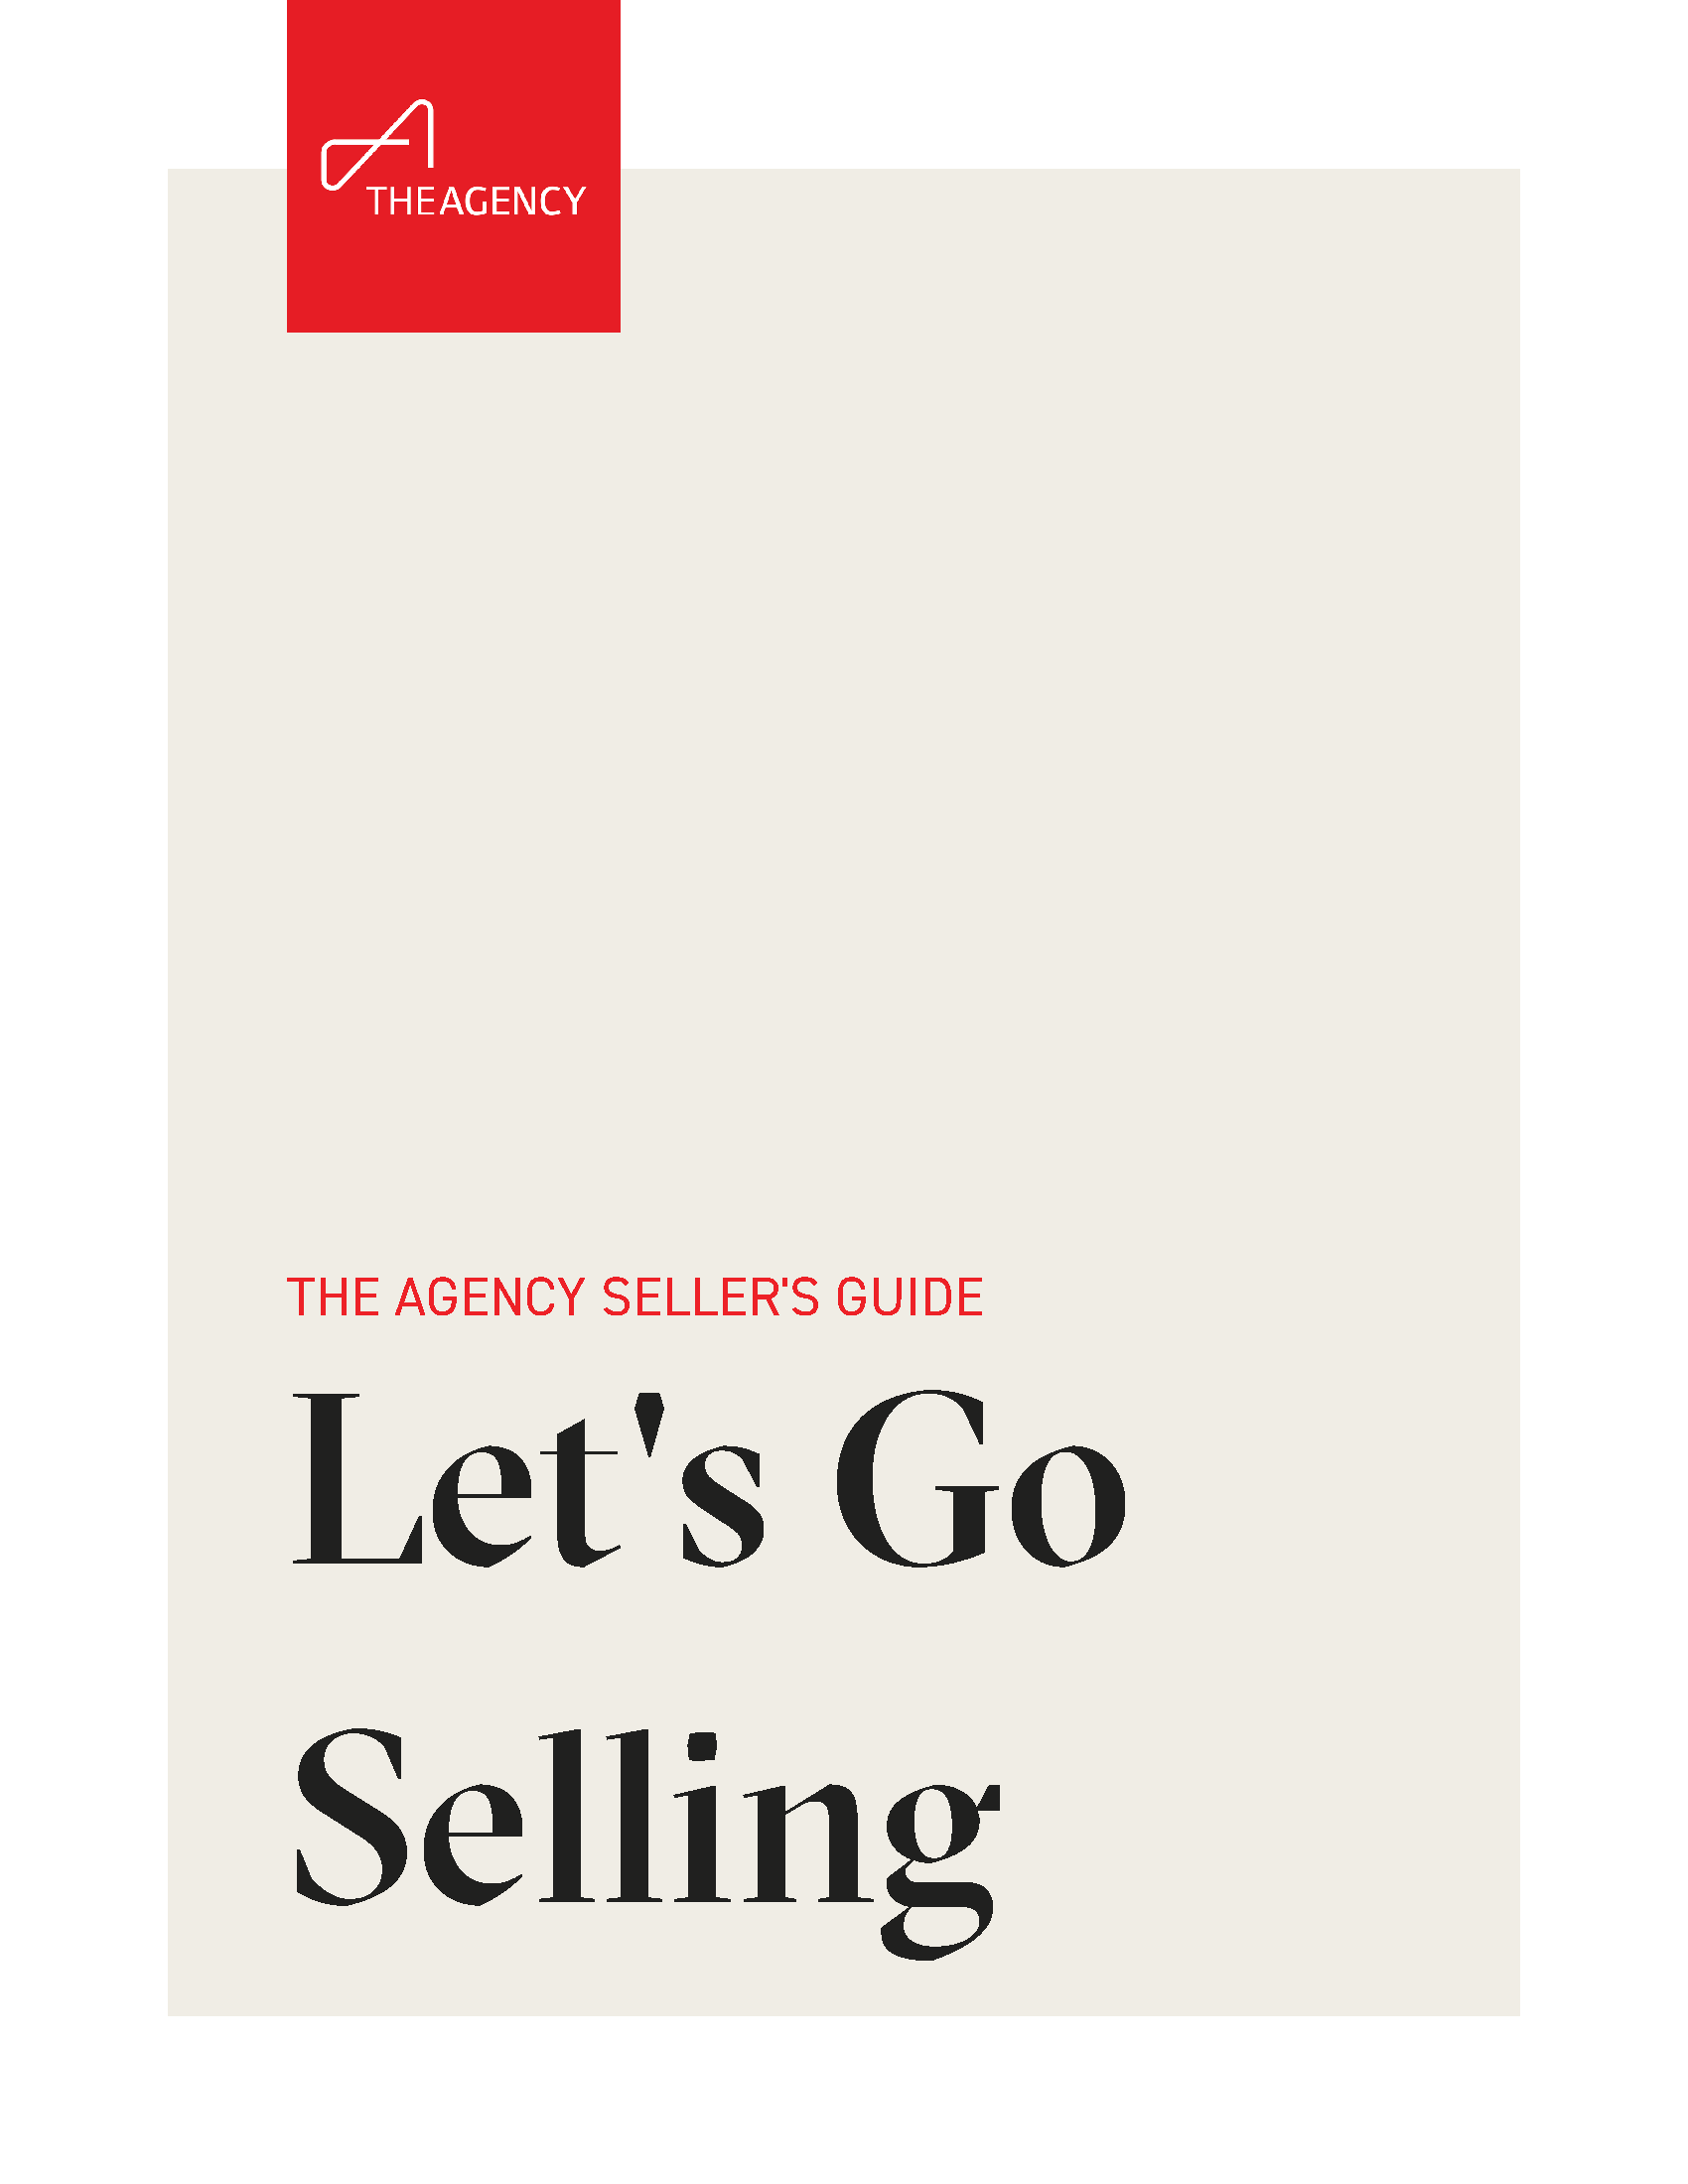 Sellers guide